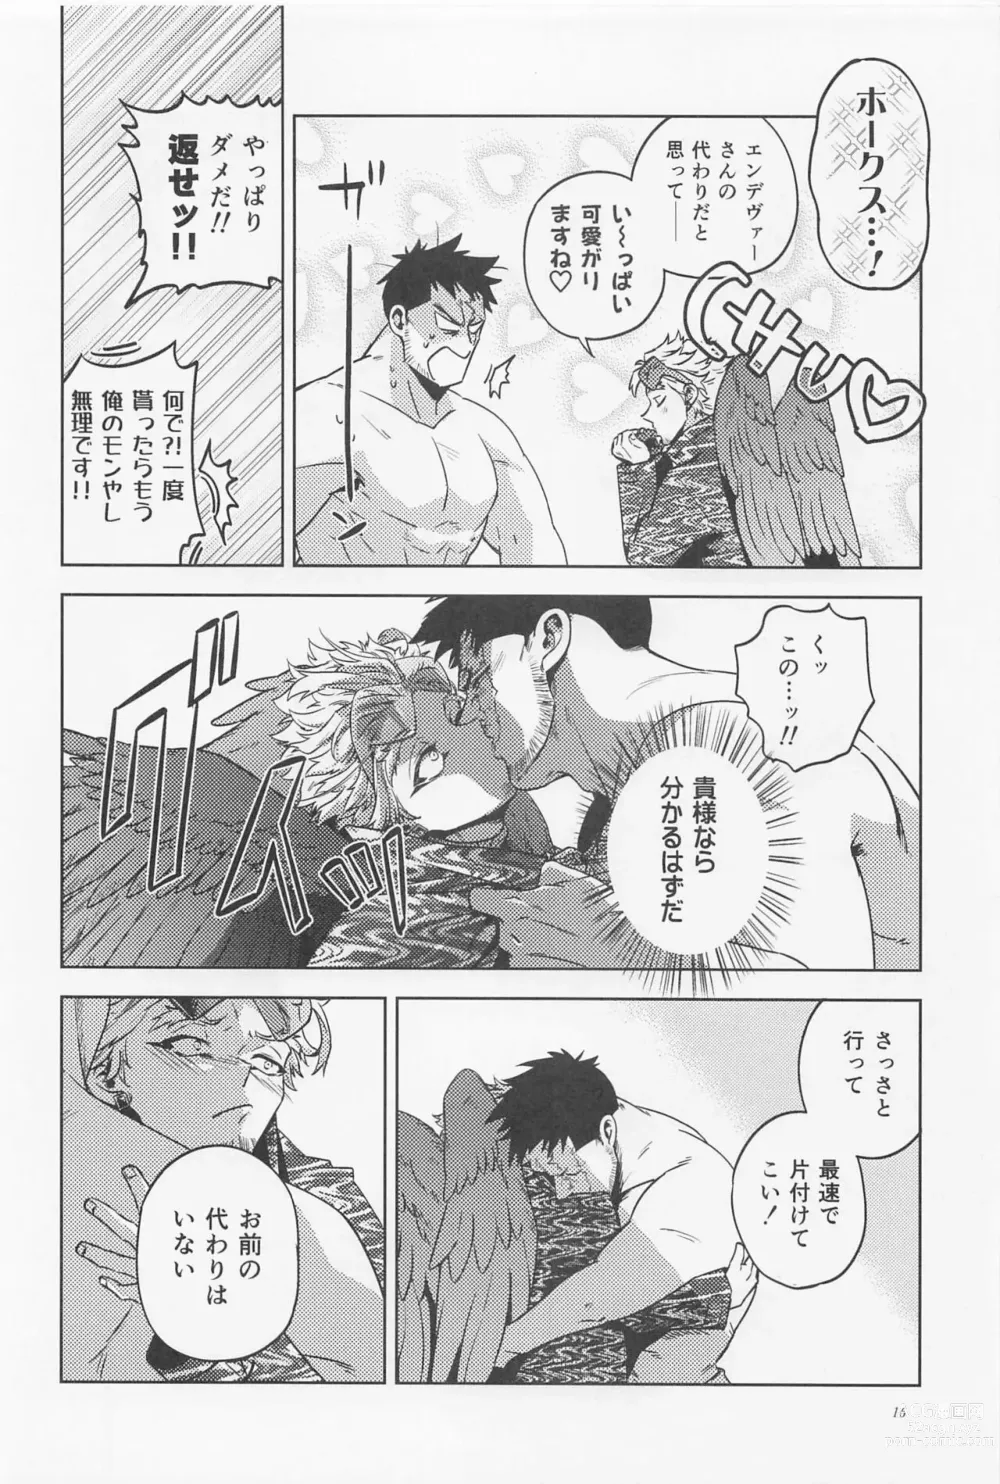 Page 15 of doujinshi 30-pun shika Nai!!!!